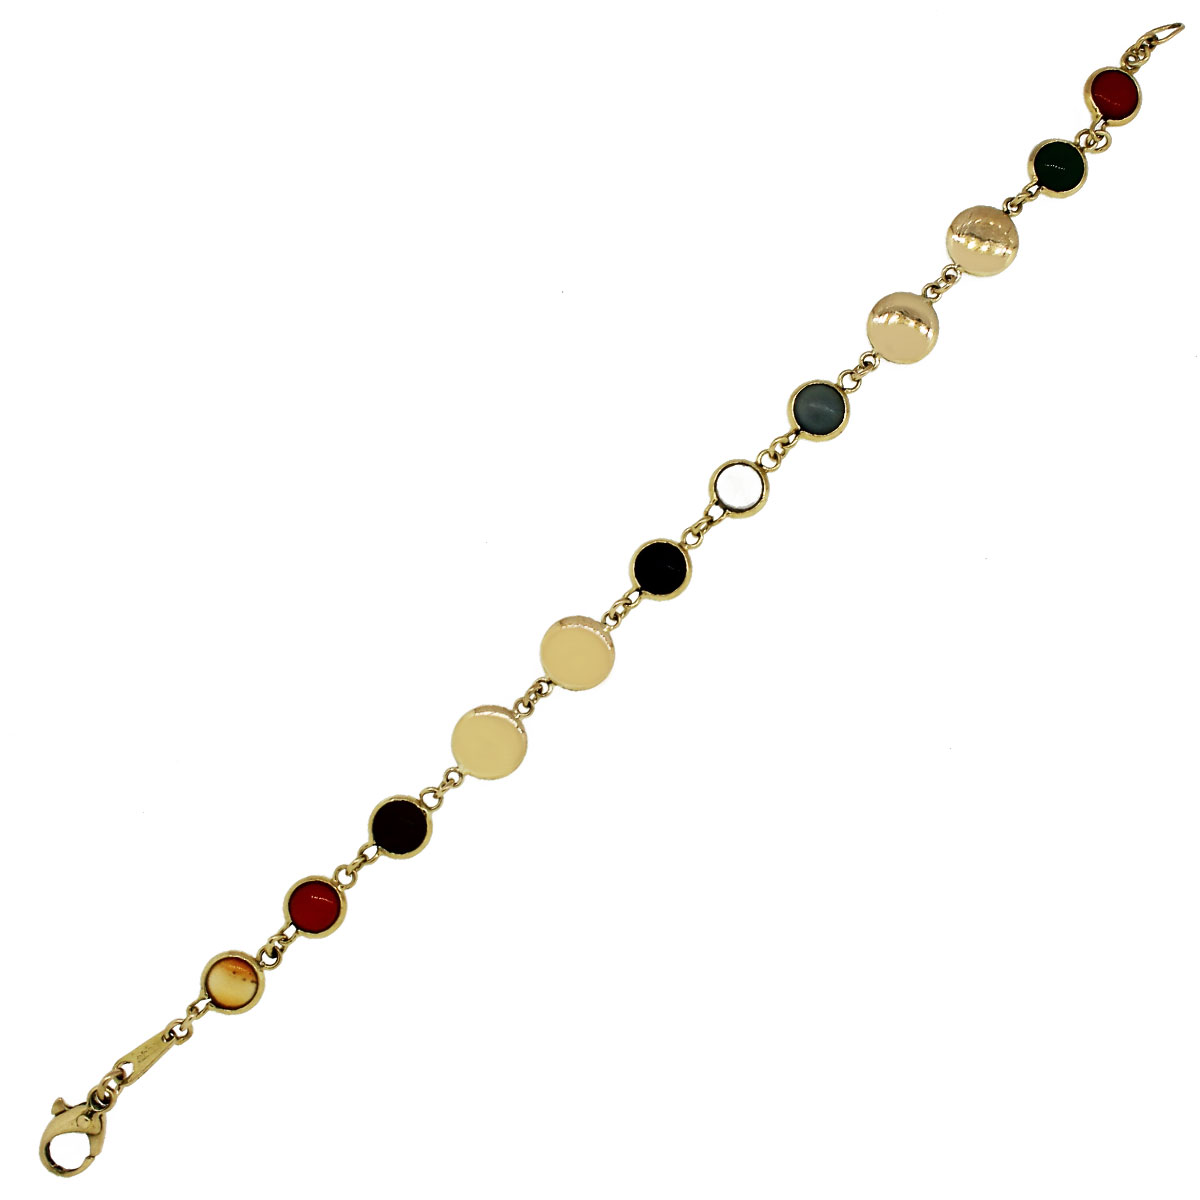 Gold Bracelets for Men in 22K Gold -Indian Gold Jewelry -Buy Online